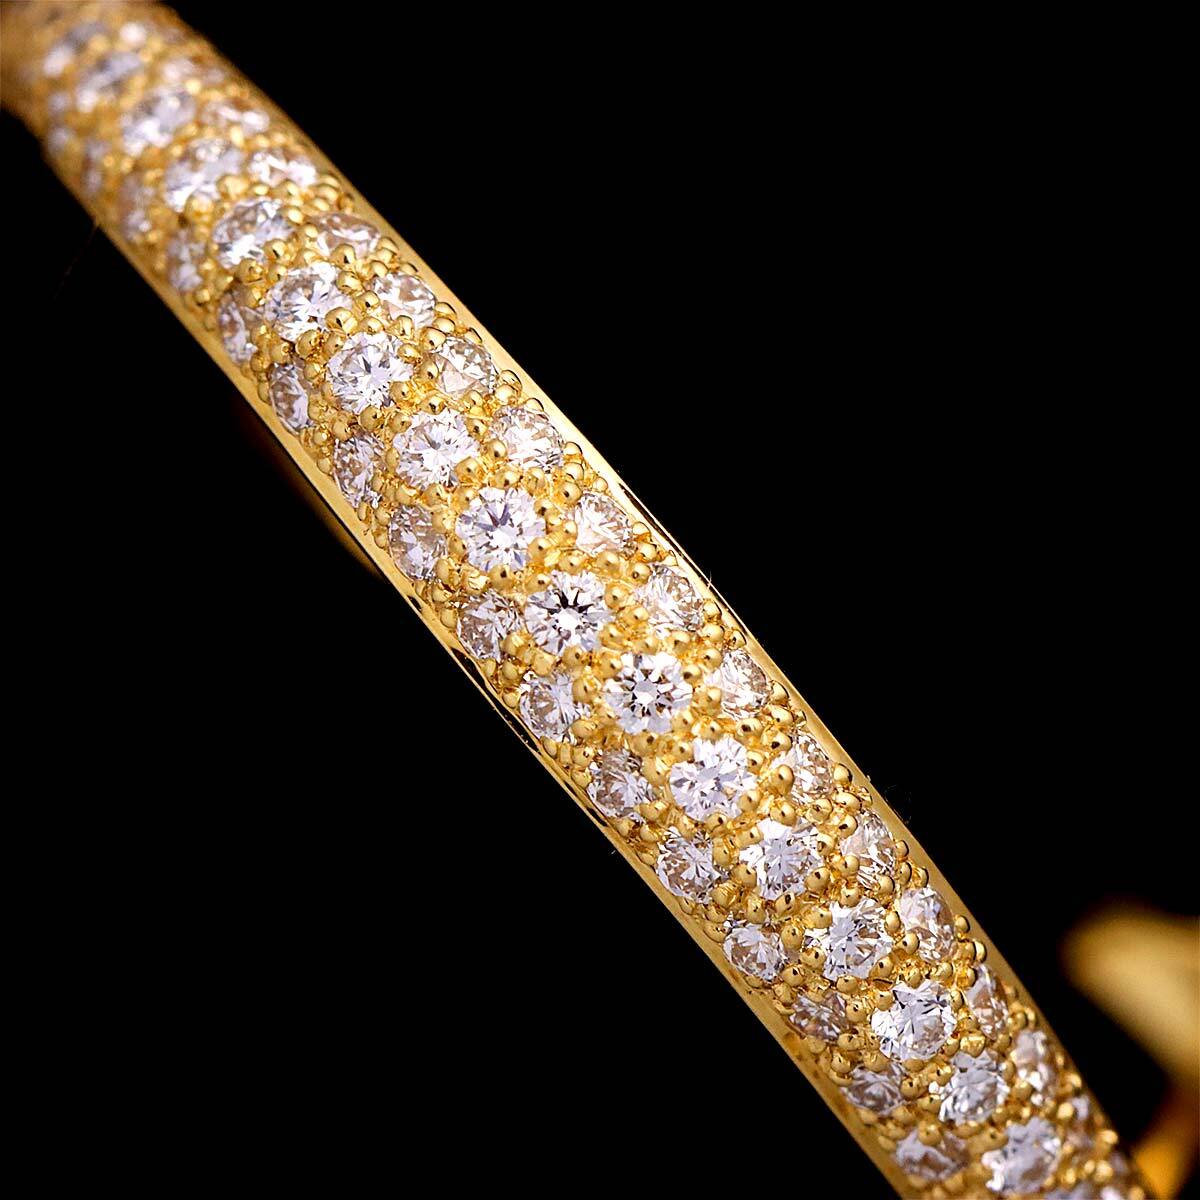  Cartier Cartierpave большой Yahoo! p серьги K18 YG желтое золото 750 Diamond Earrings Pierced[ сертификат имеется ] 90227359